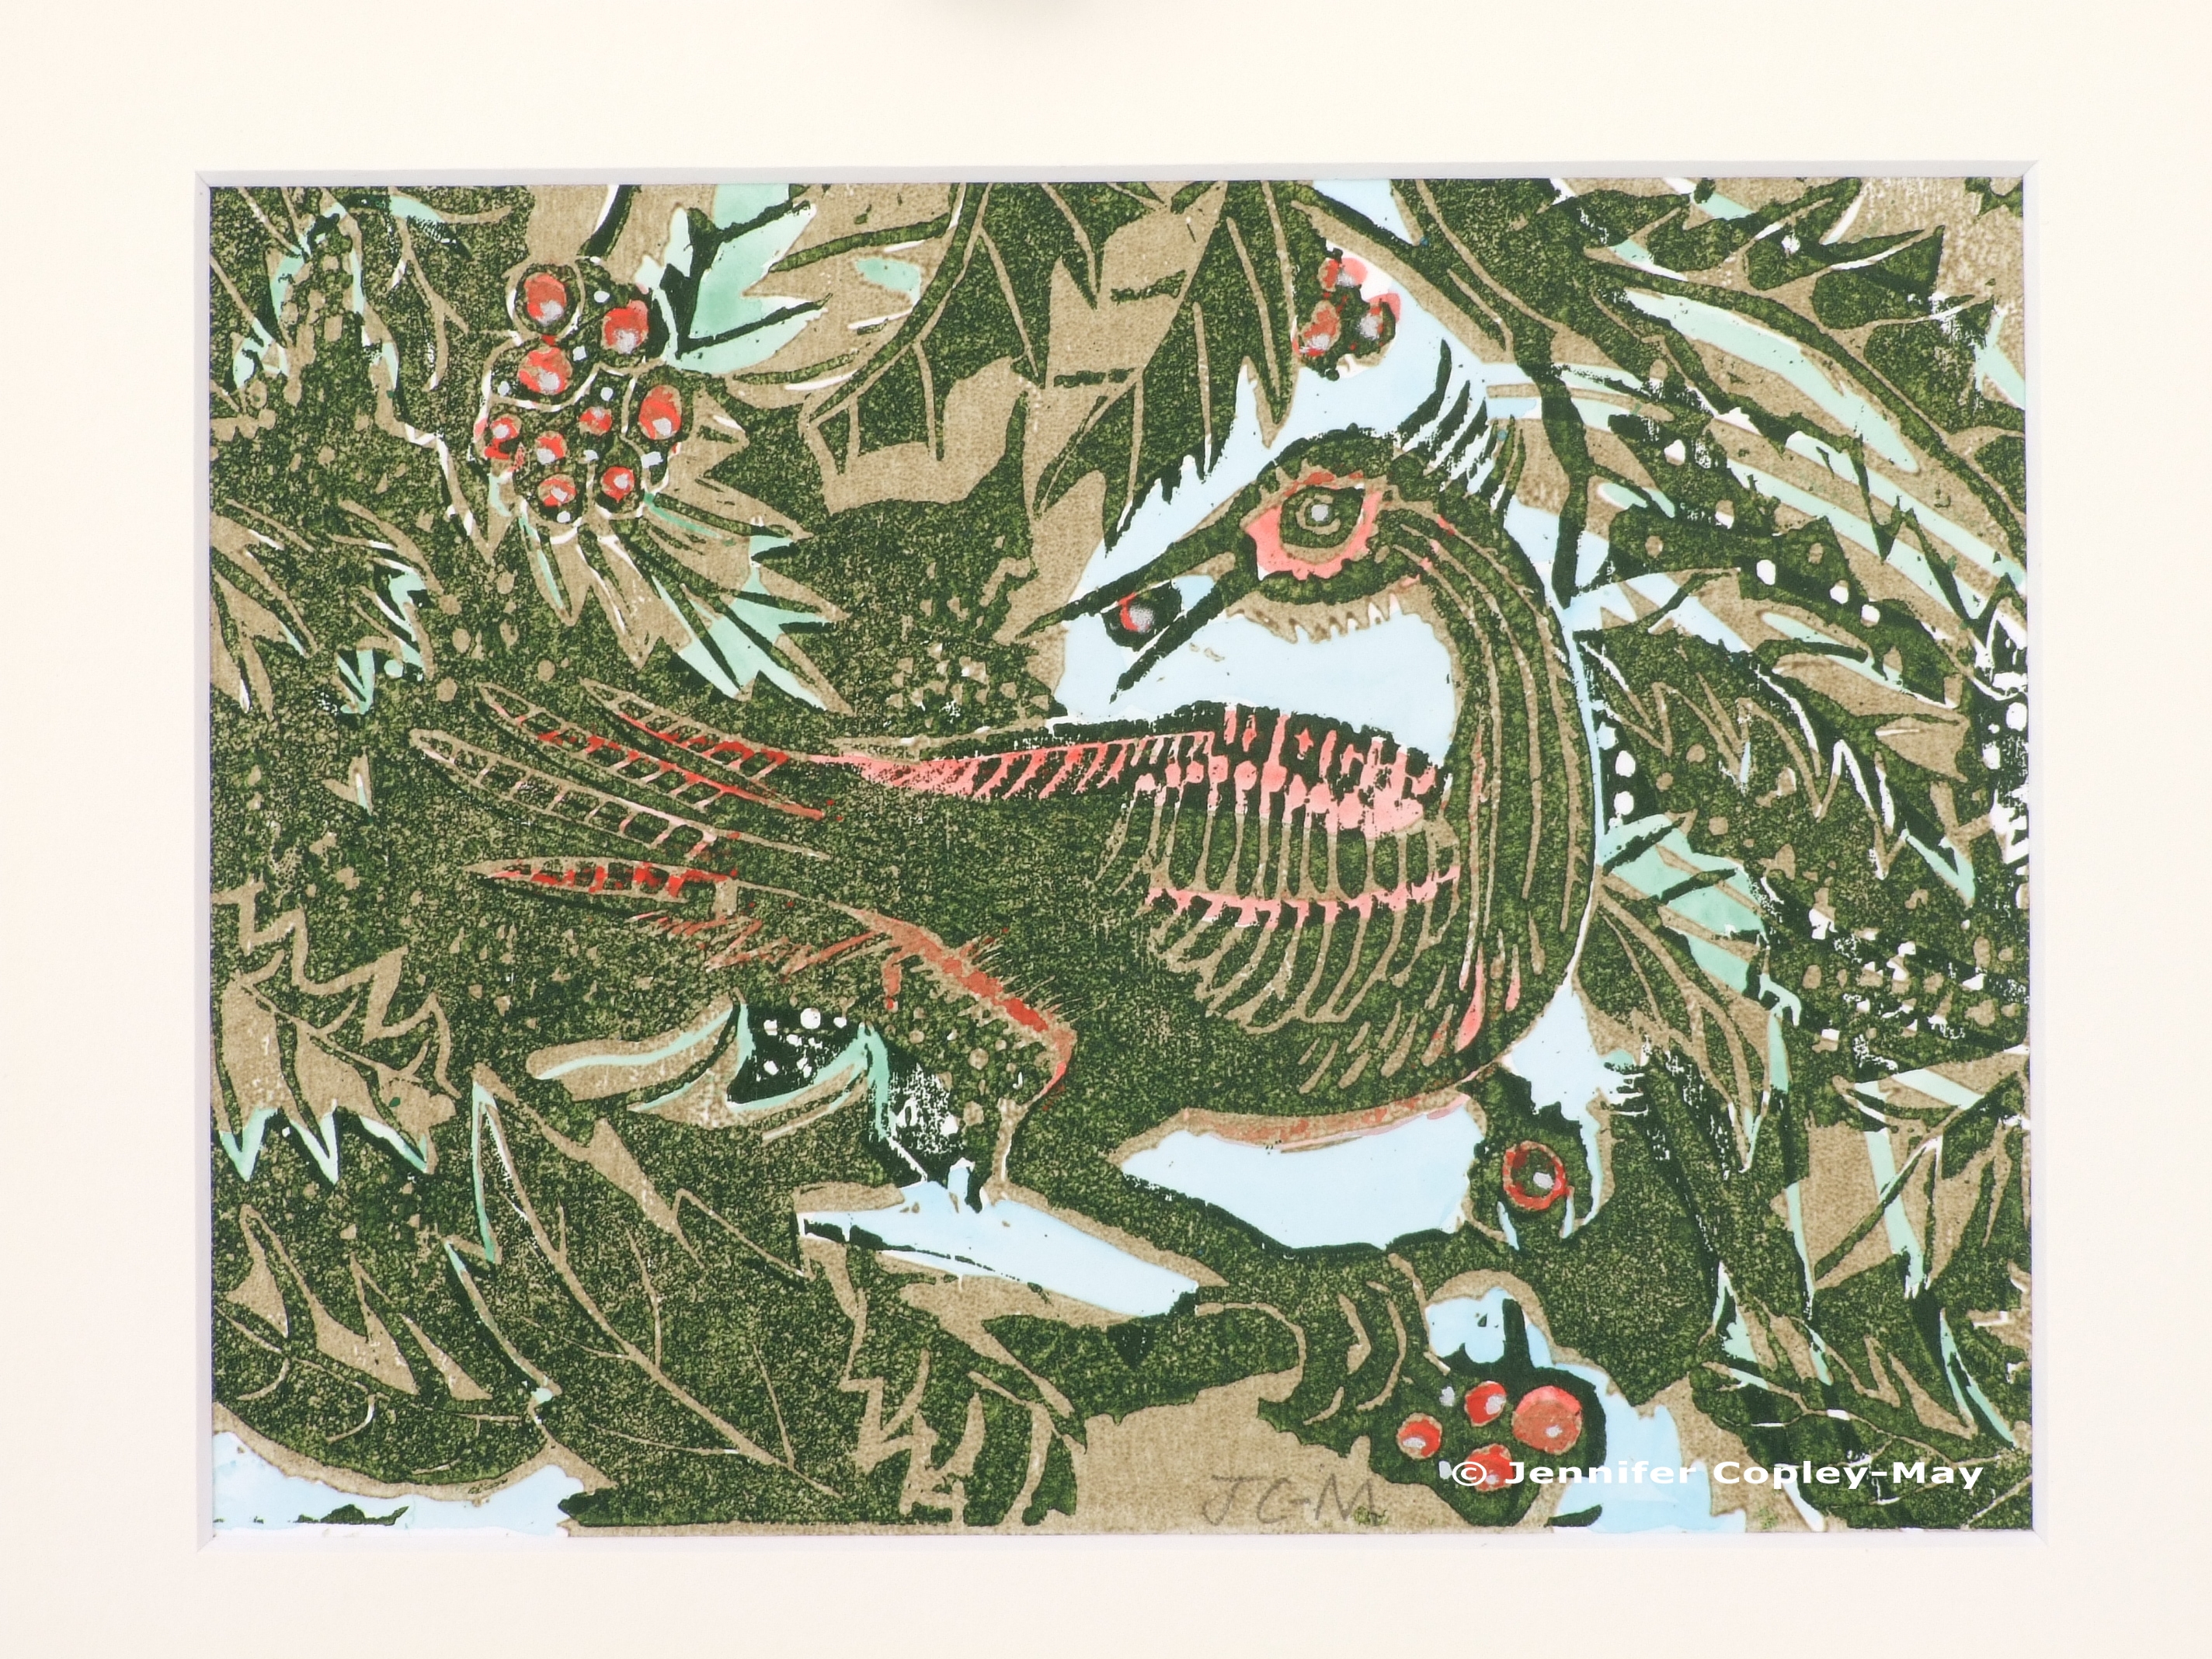 Exotic Bird (tl/ol), original woodcut print by Jennifer Copley-May